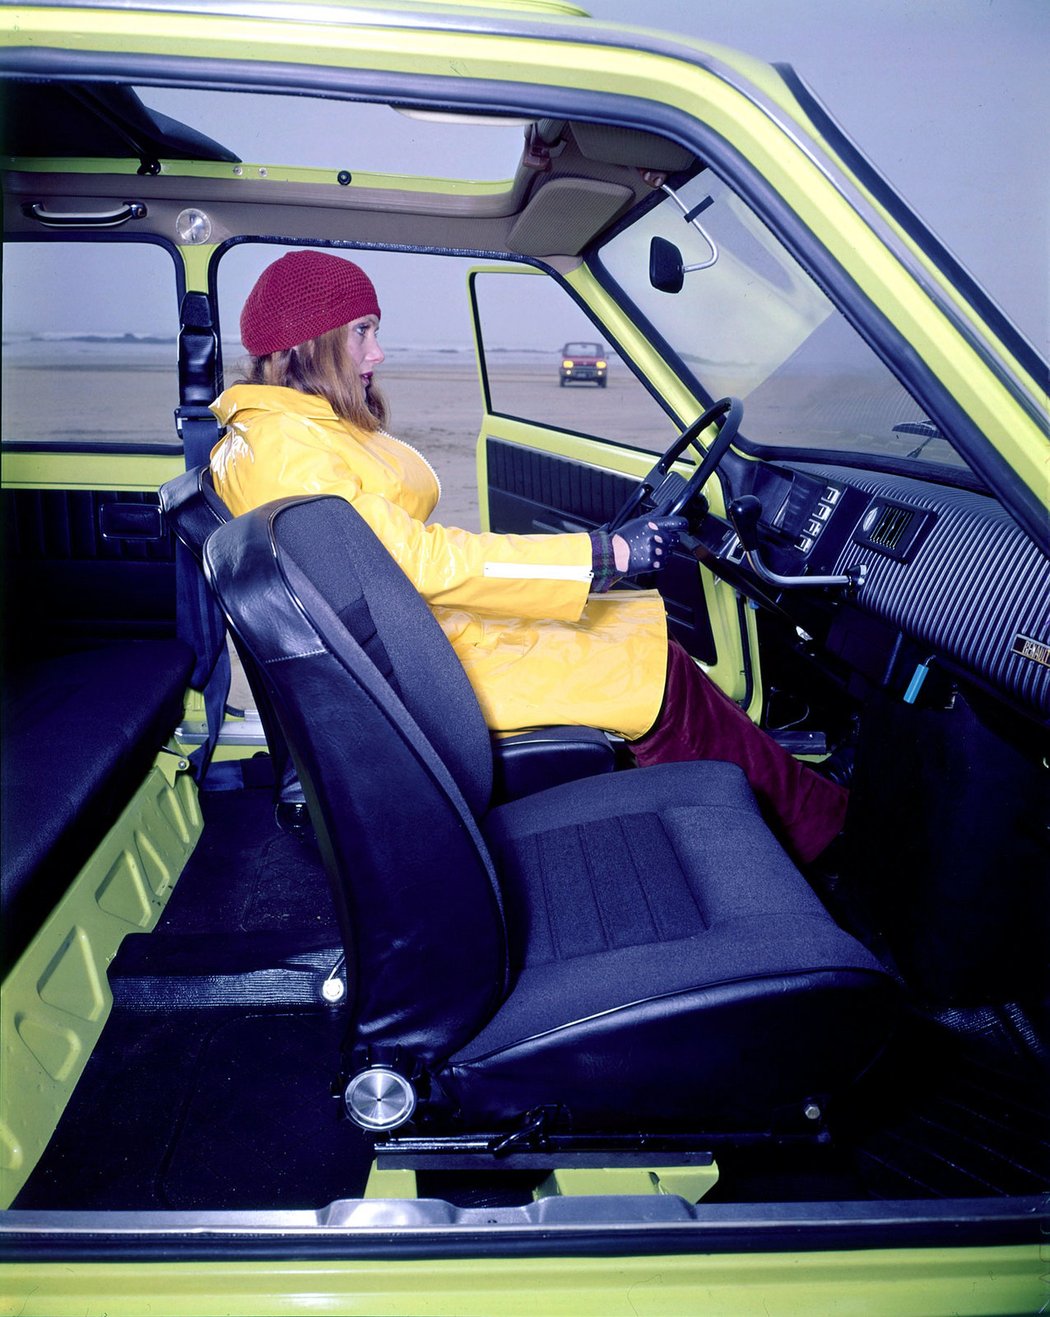 Renault 5 (1972)